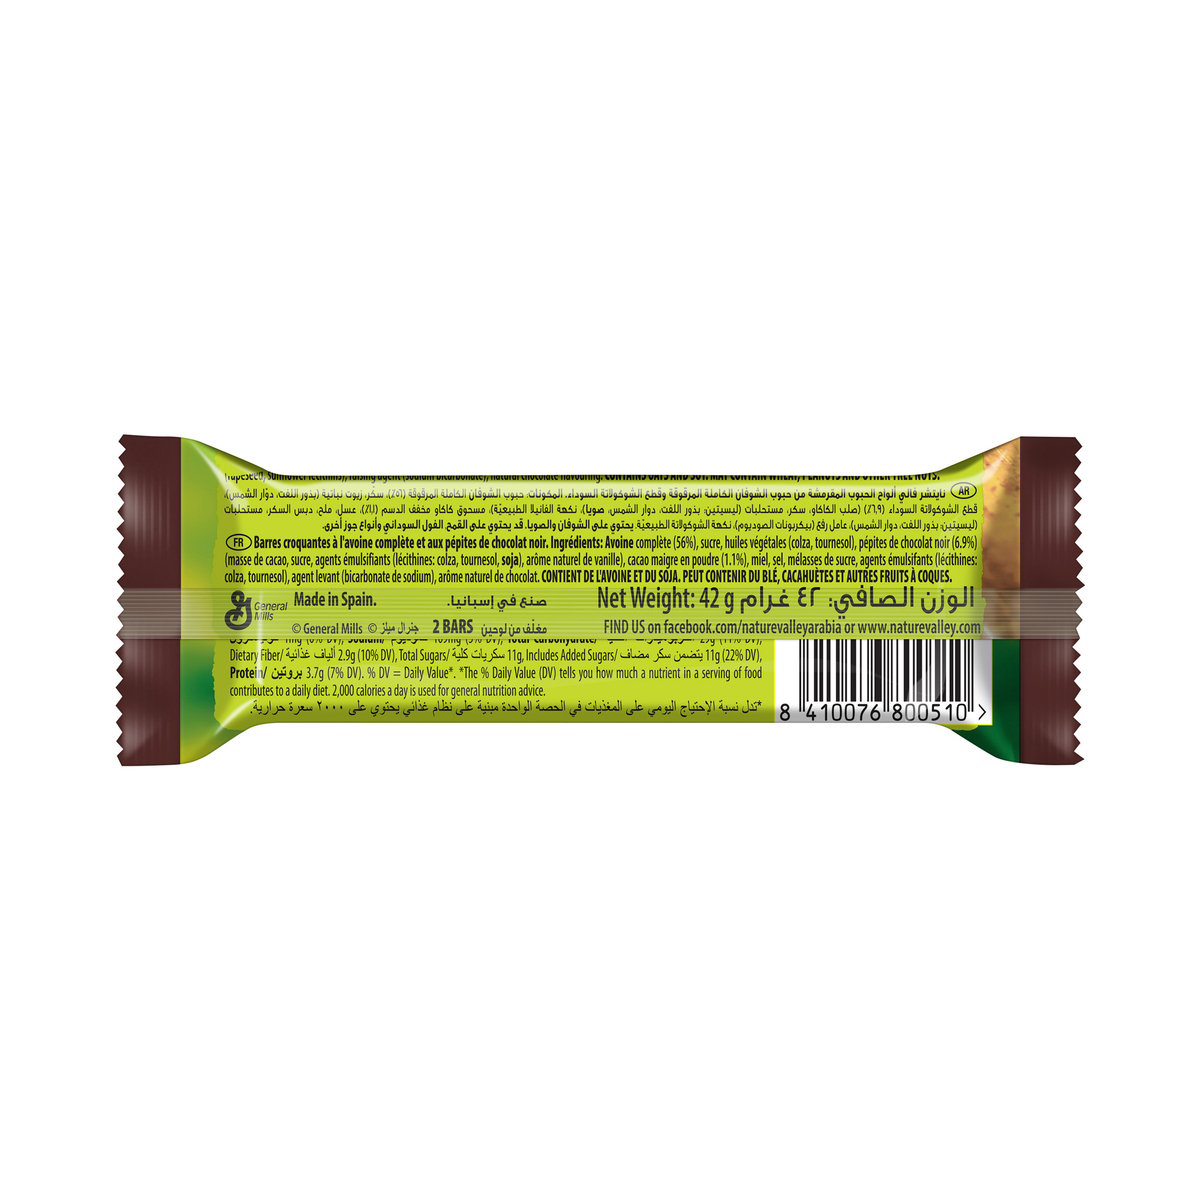 Nature Valley Crunchy Oats & Chocolate Granola Bar 5 x 42 g